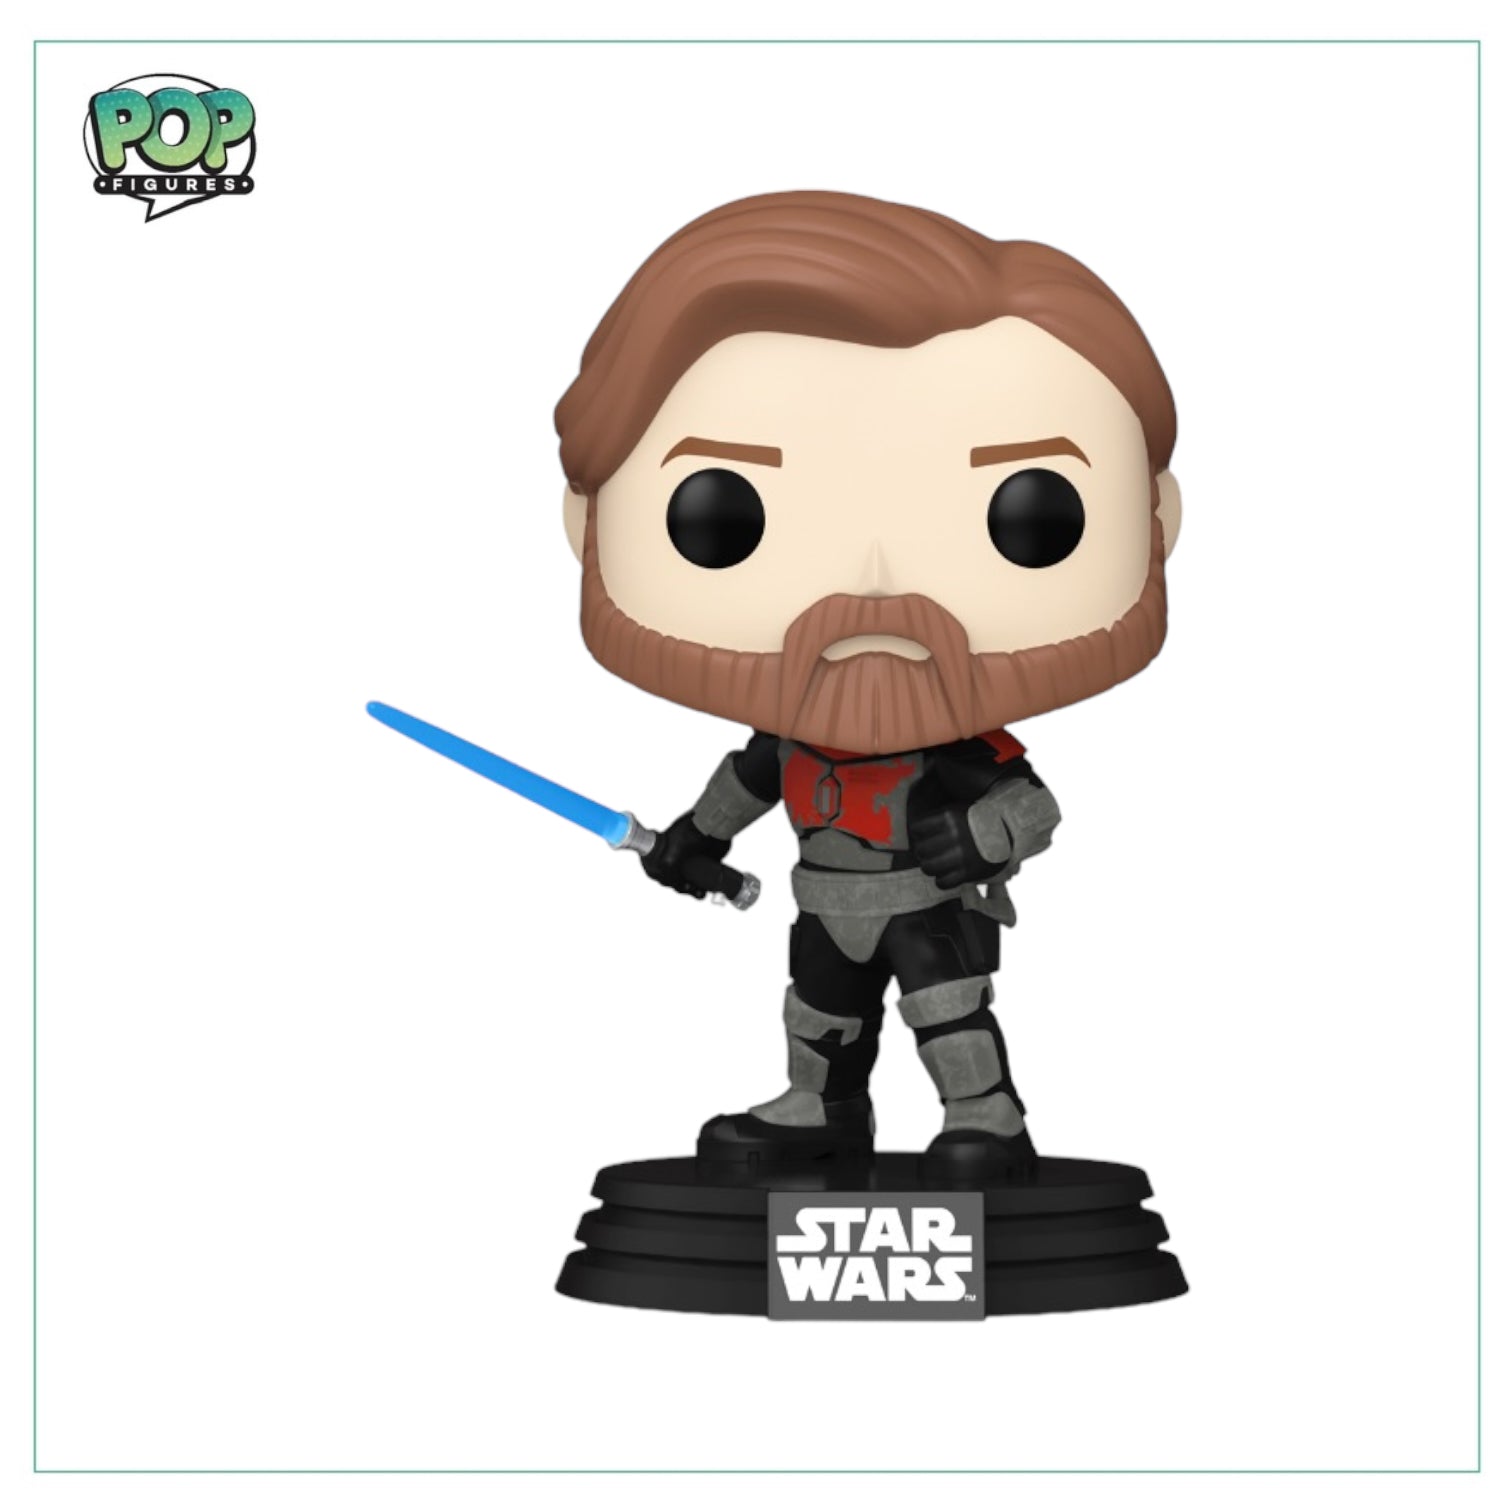 Obi-Wan Kenobi #599 Funko Pop! - Star Wars - Entertainment Earth Exclusive